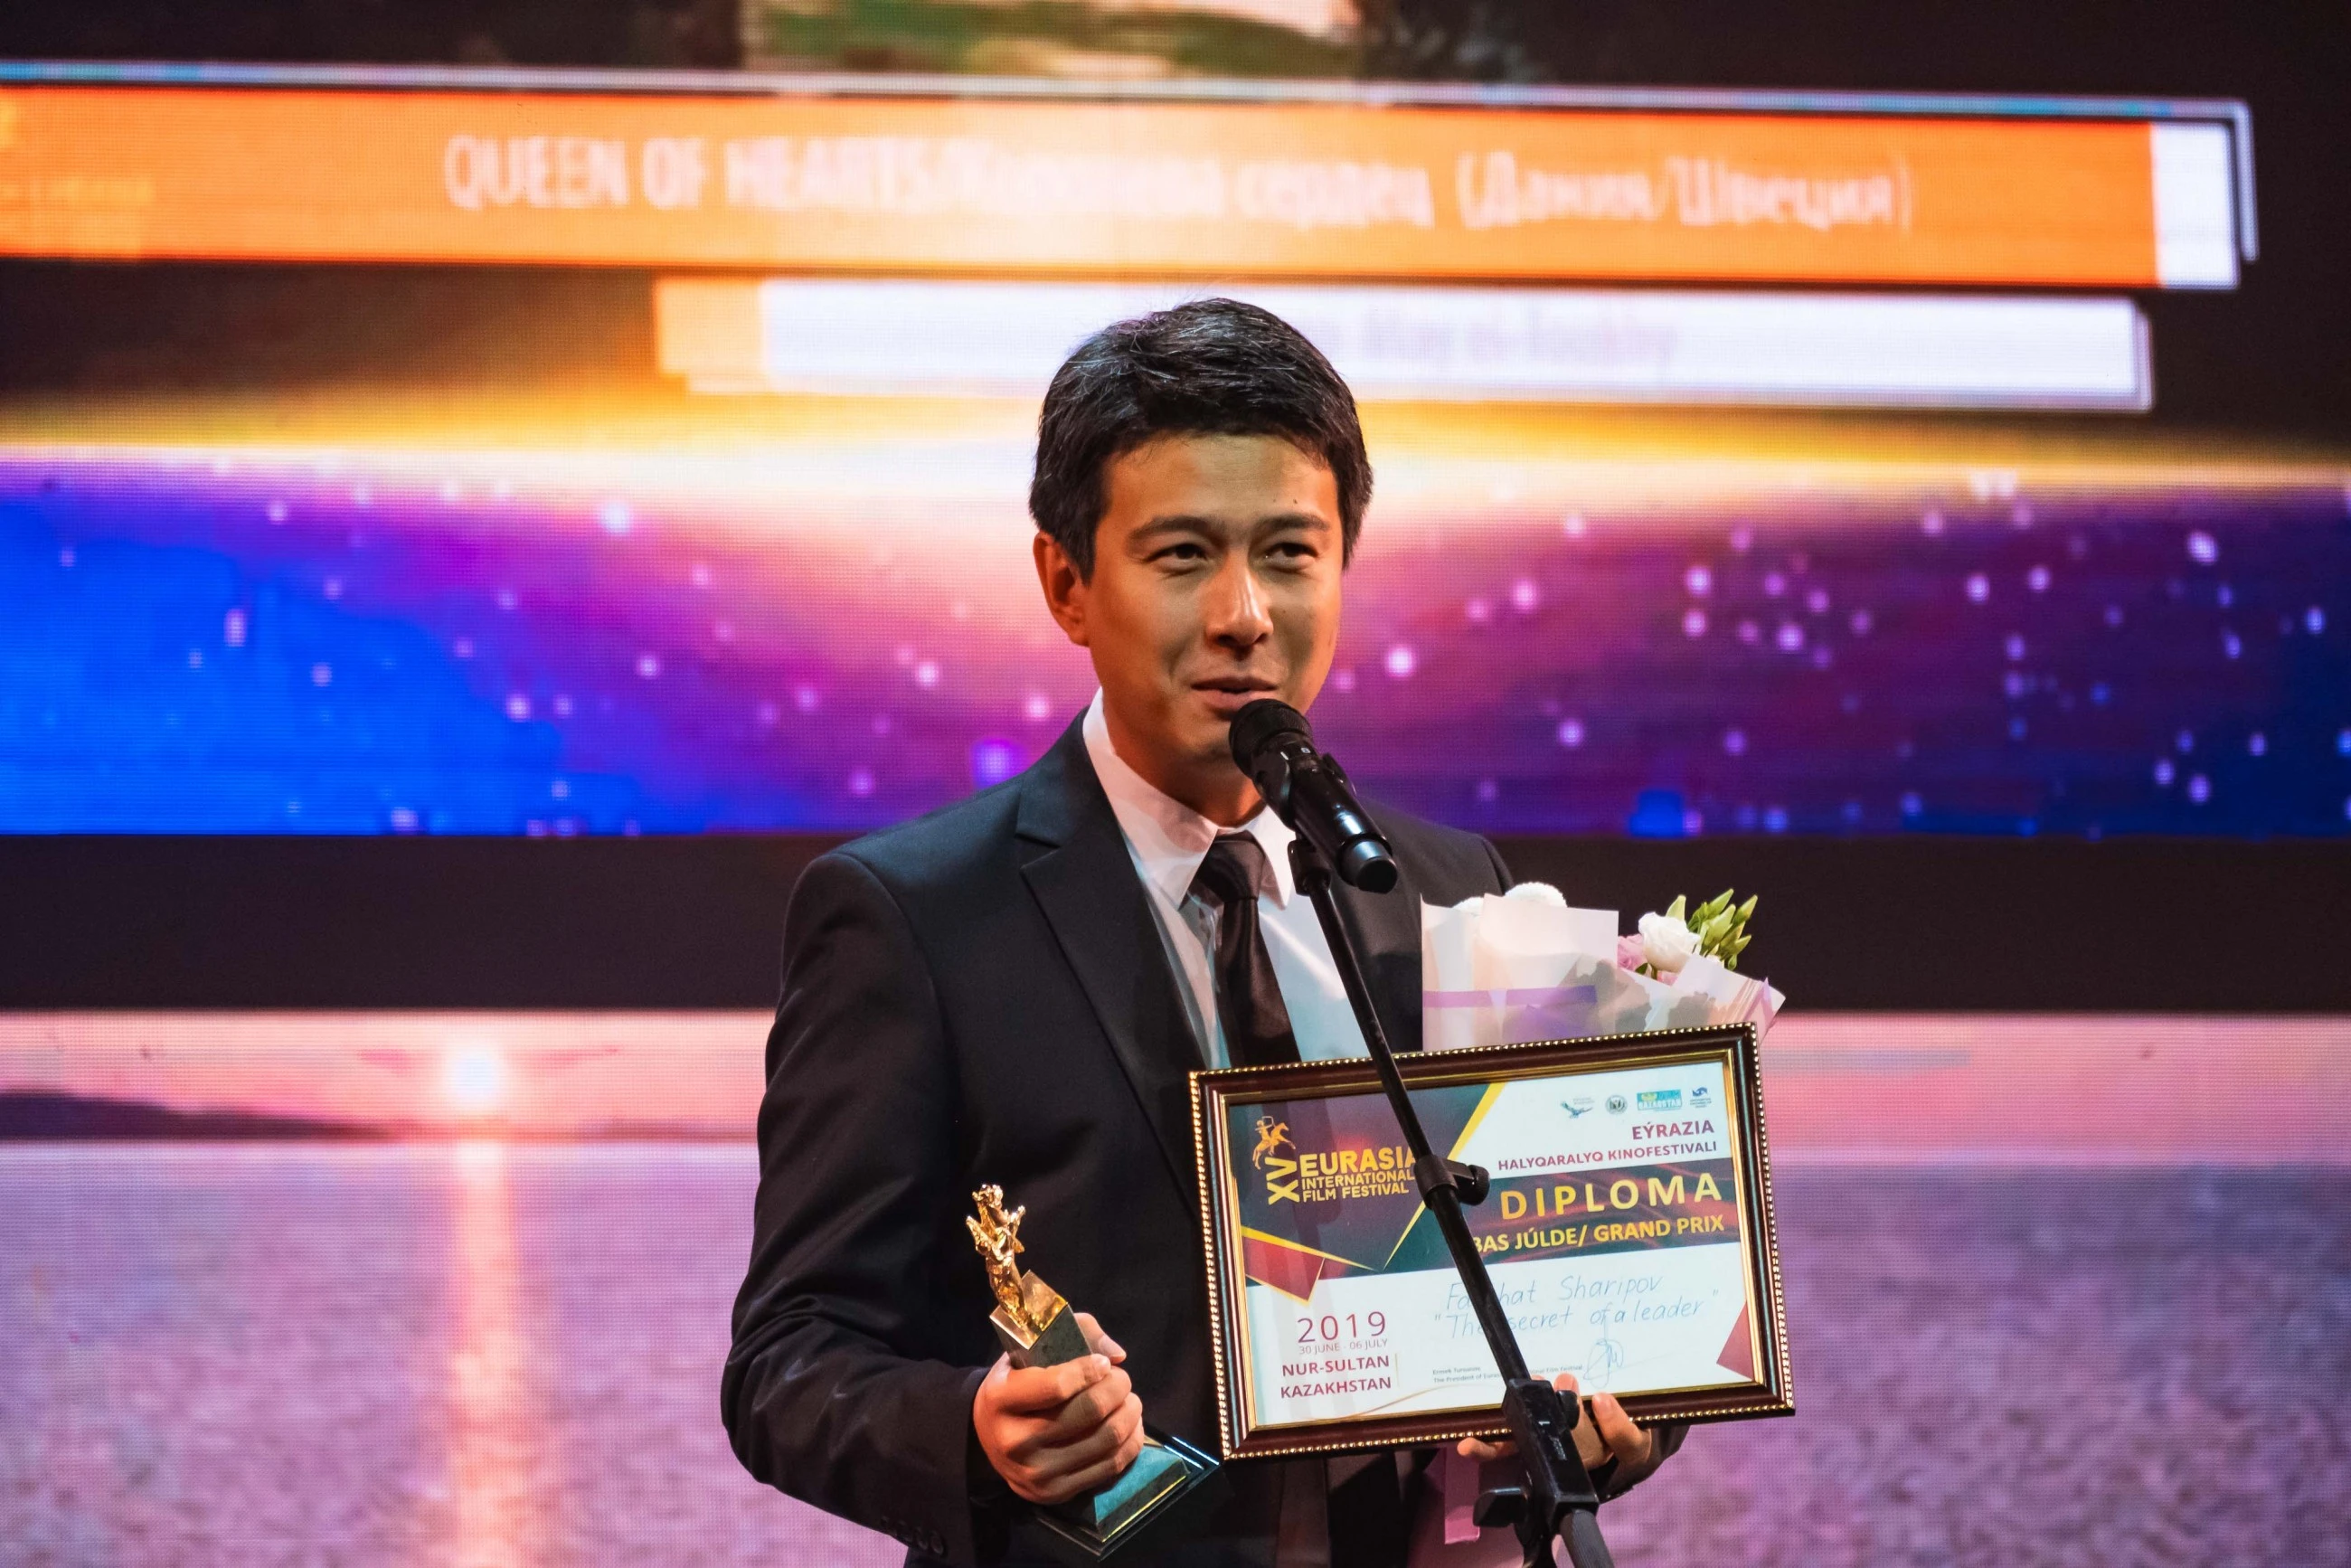 The film of Kazakhstani director received Eurasia’s Grand-Prix.